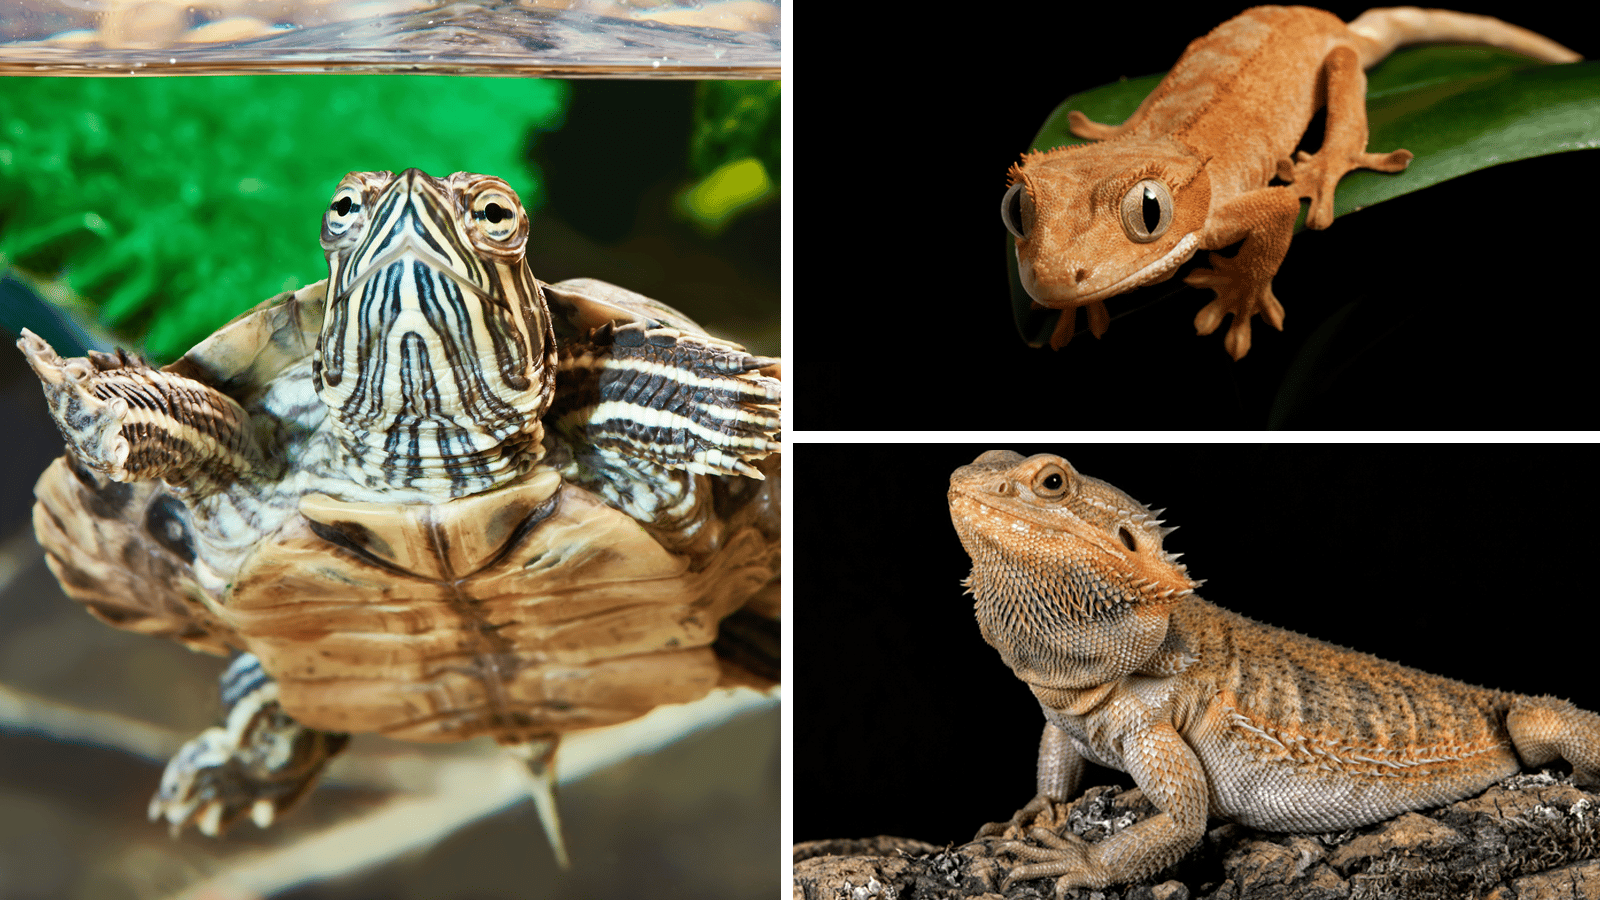 Should You Get a Reptile or Amphibian as a Pet?